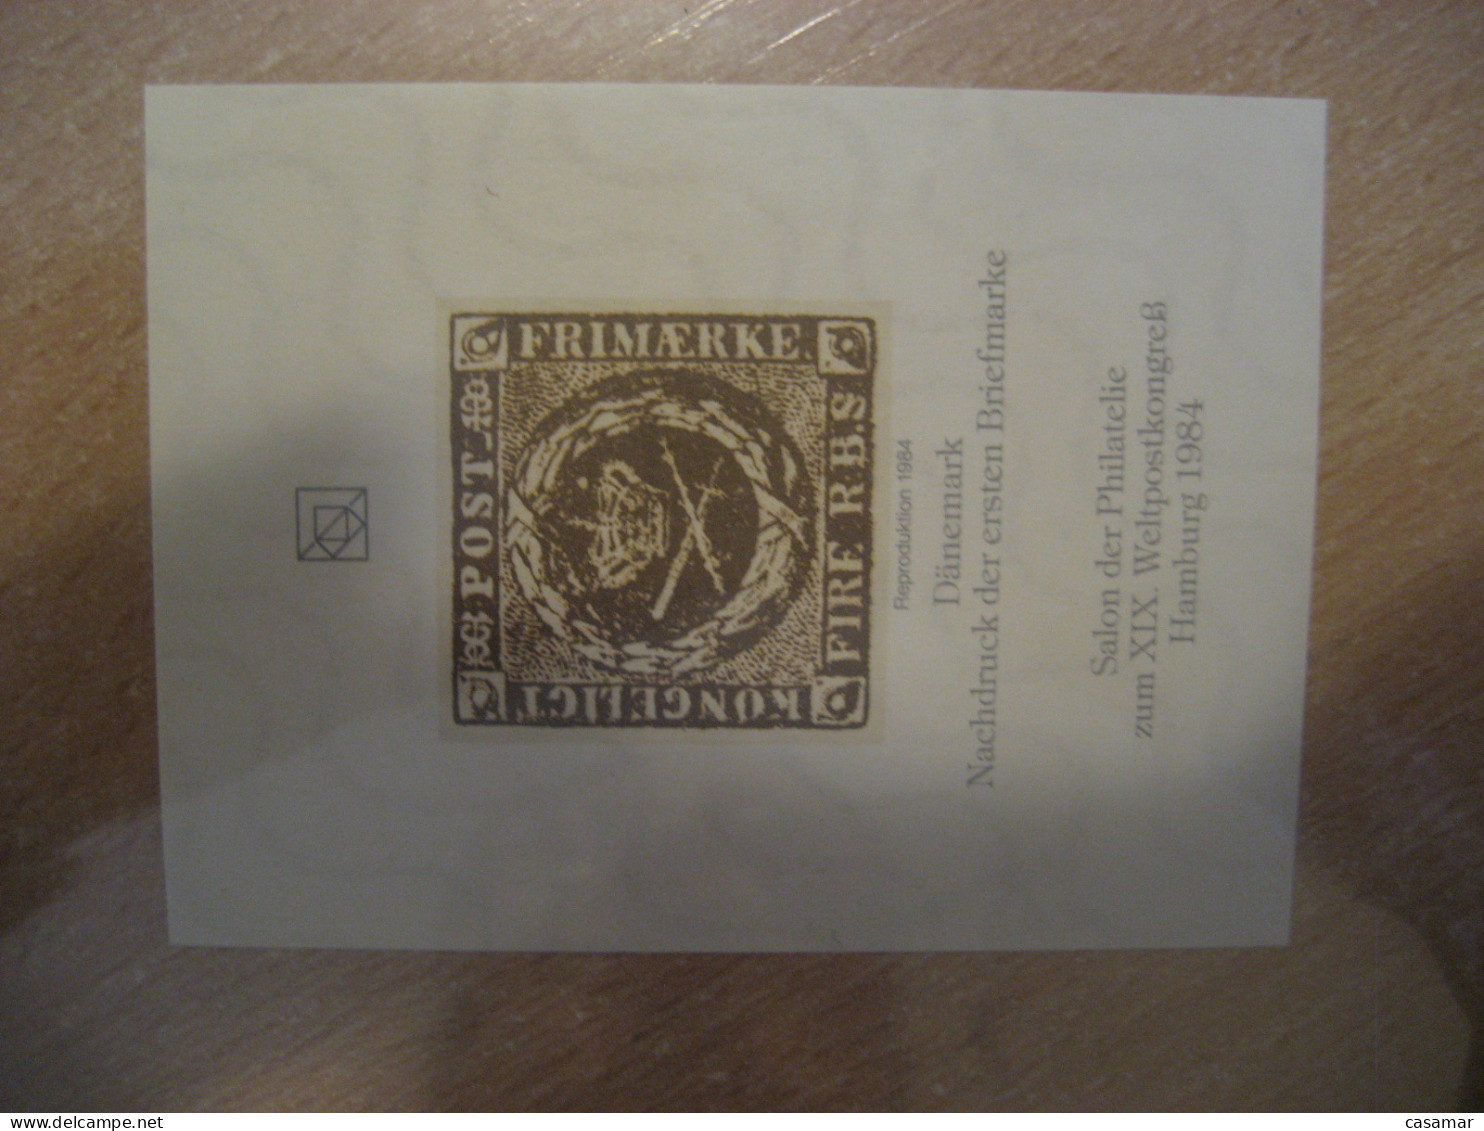 HAMBURG 1984 DENMARK Imperforated Reproduktion Proof Epreuve Nachdruck Poster Stamp Vignette GERMANY Label - Essais & Réimpressions